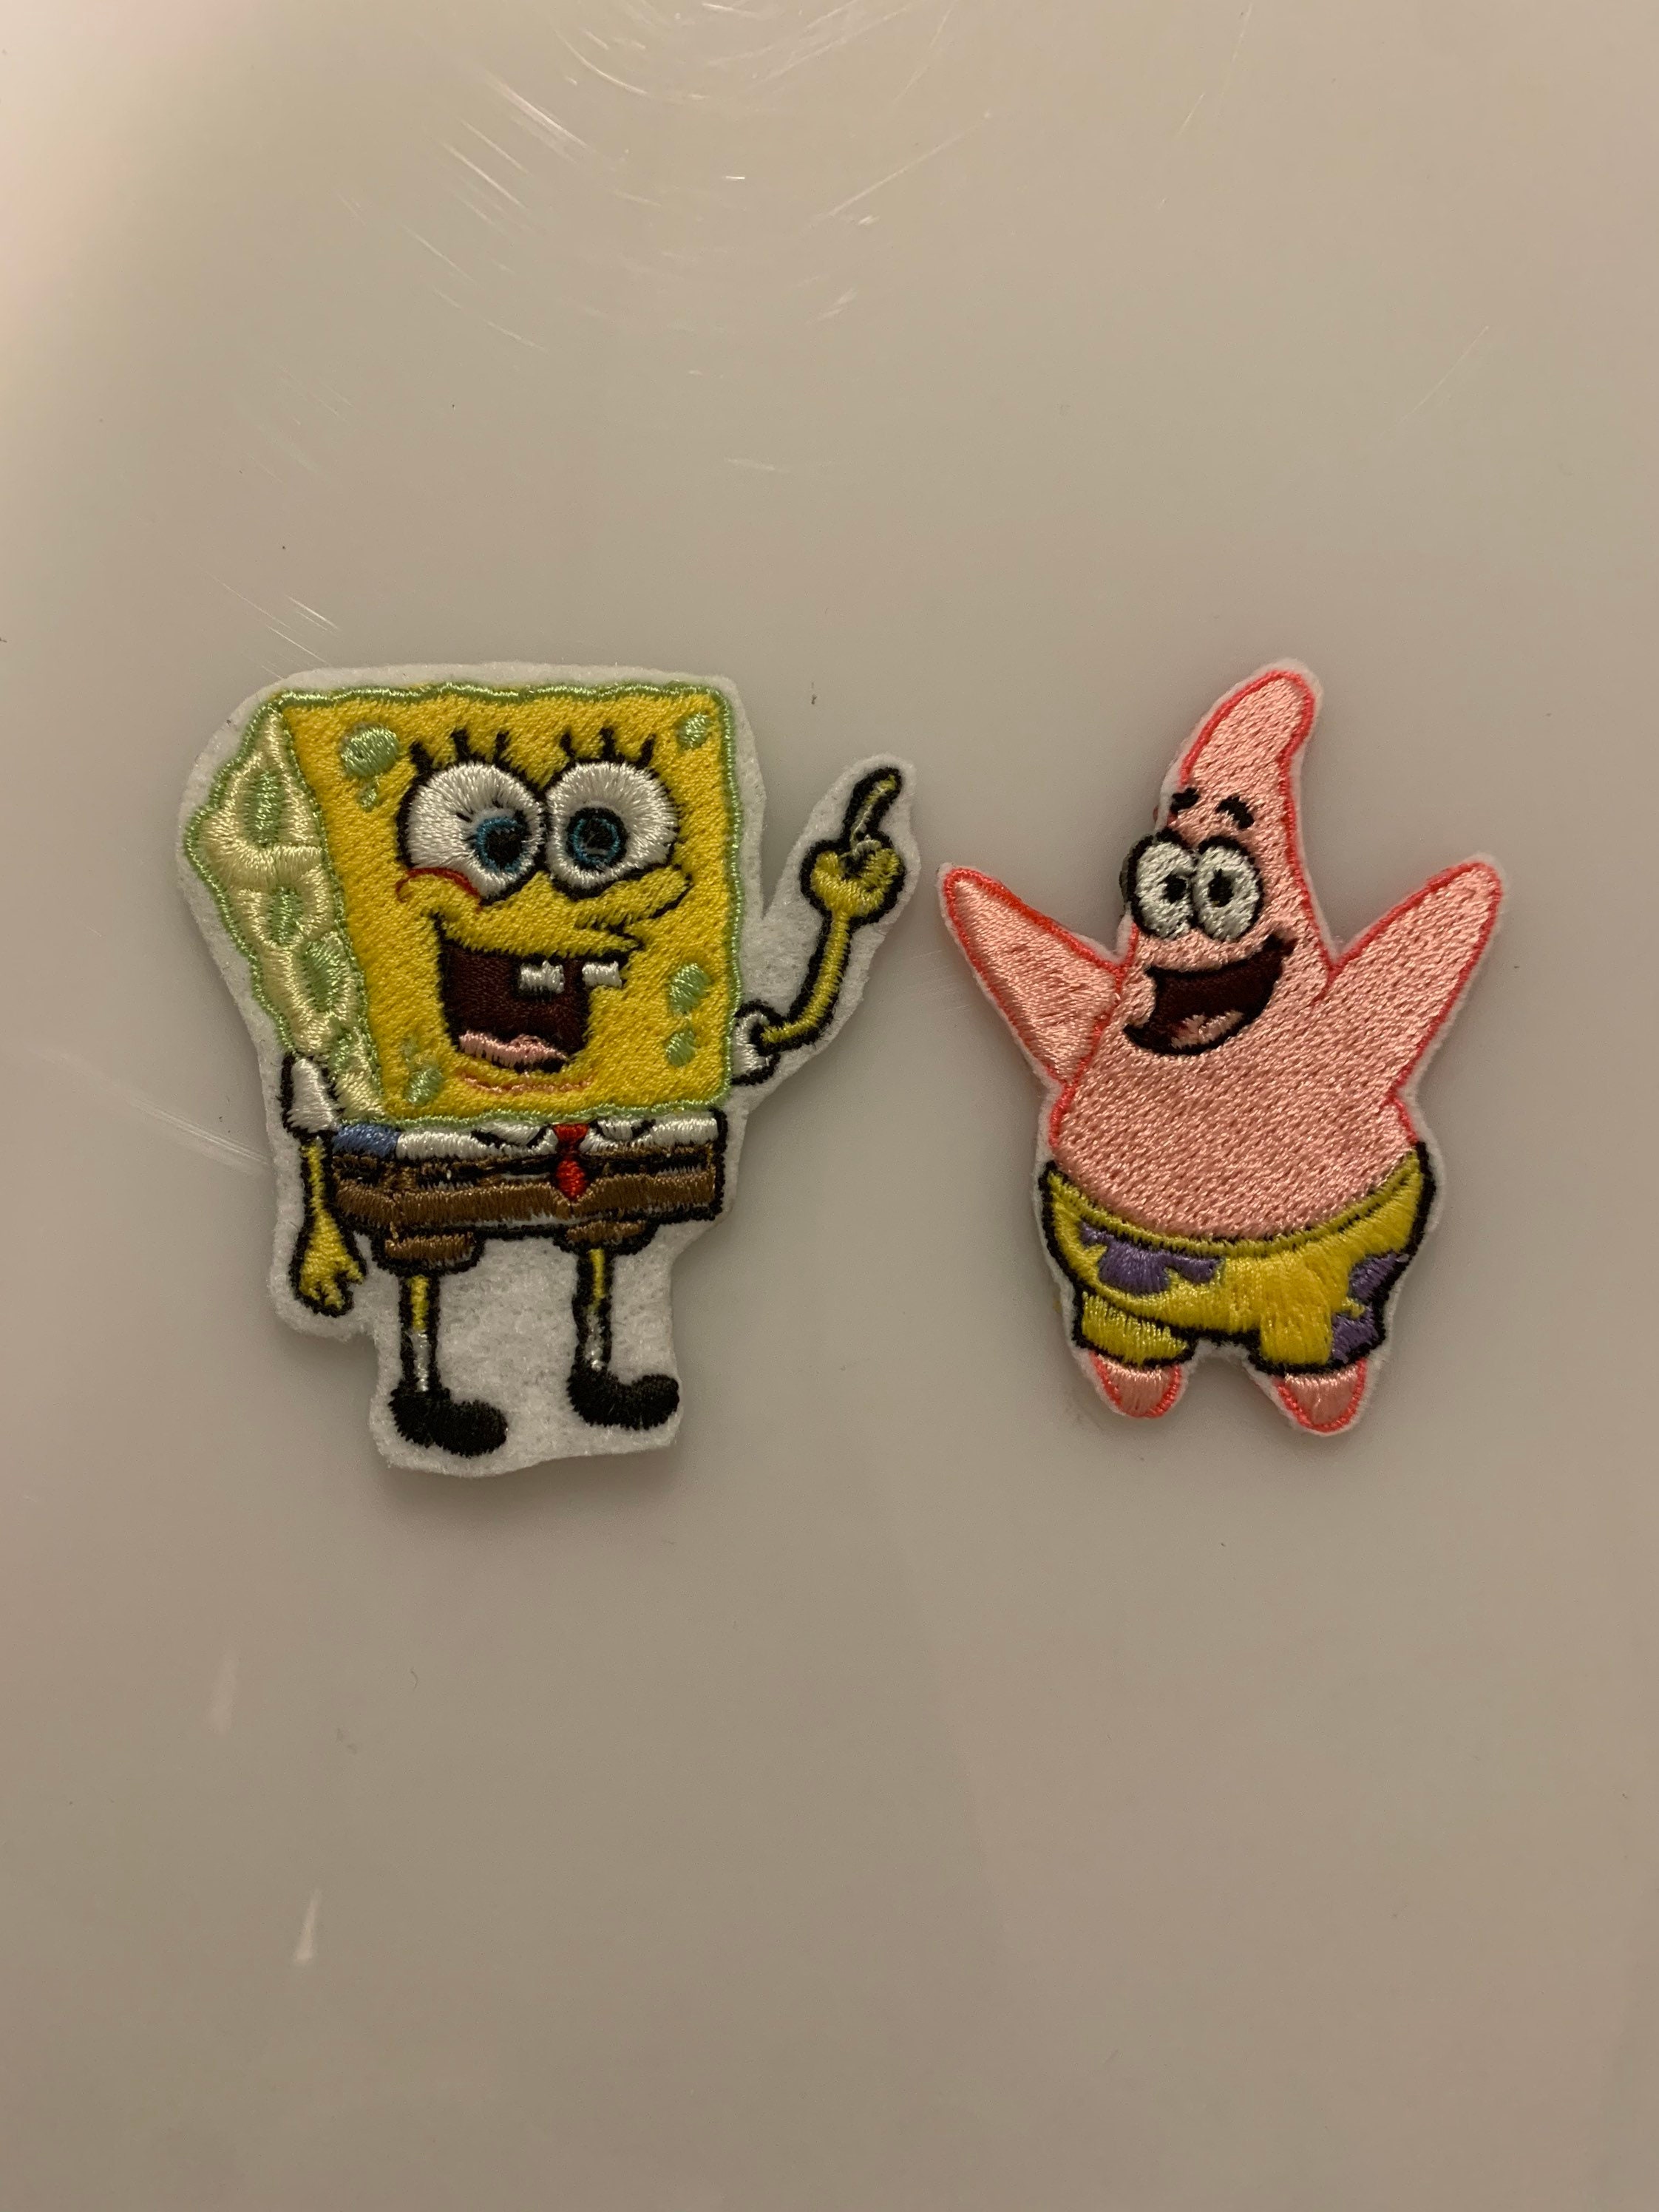 Spongebob and Patrick Patch set | Etsy